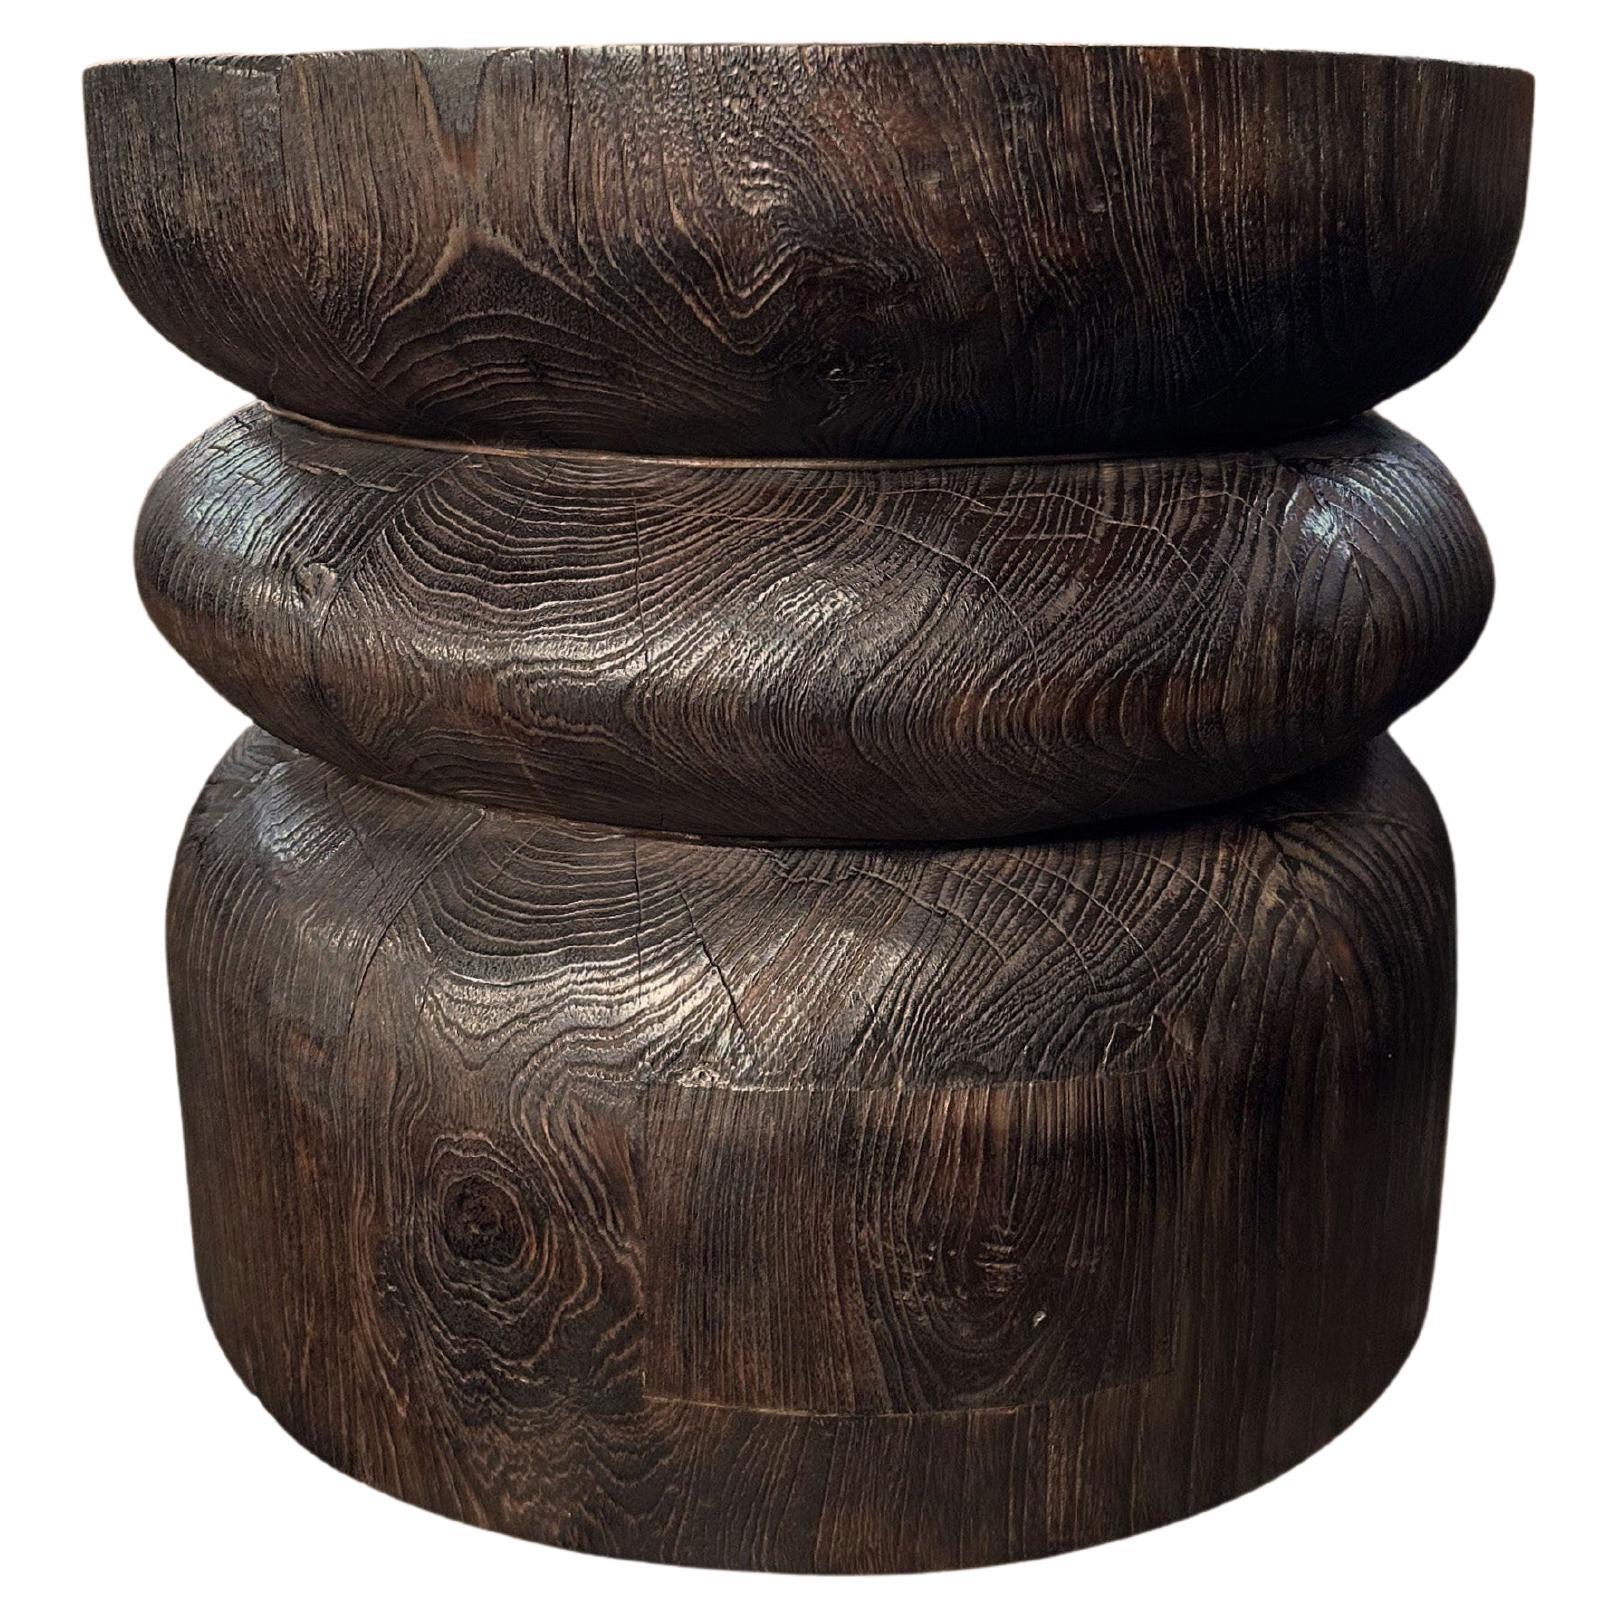 Round Teak Wood Side Table, Burnt Finish, Layered Design, Modern Organic For Sale